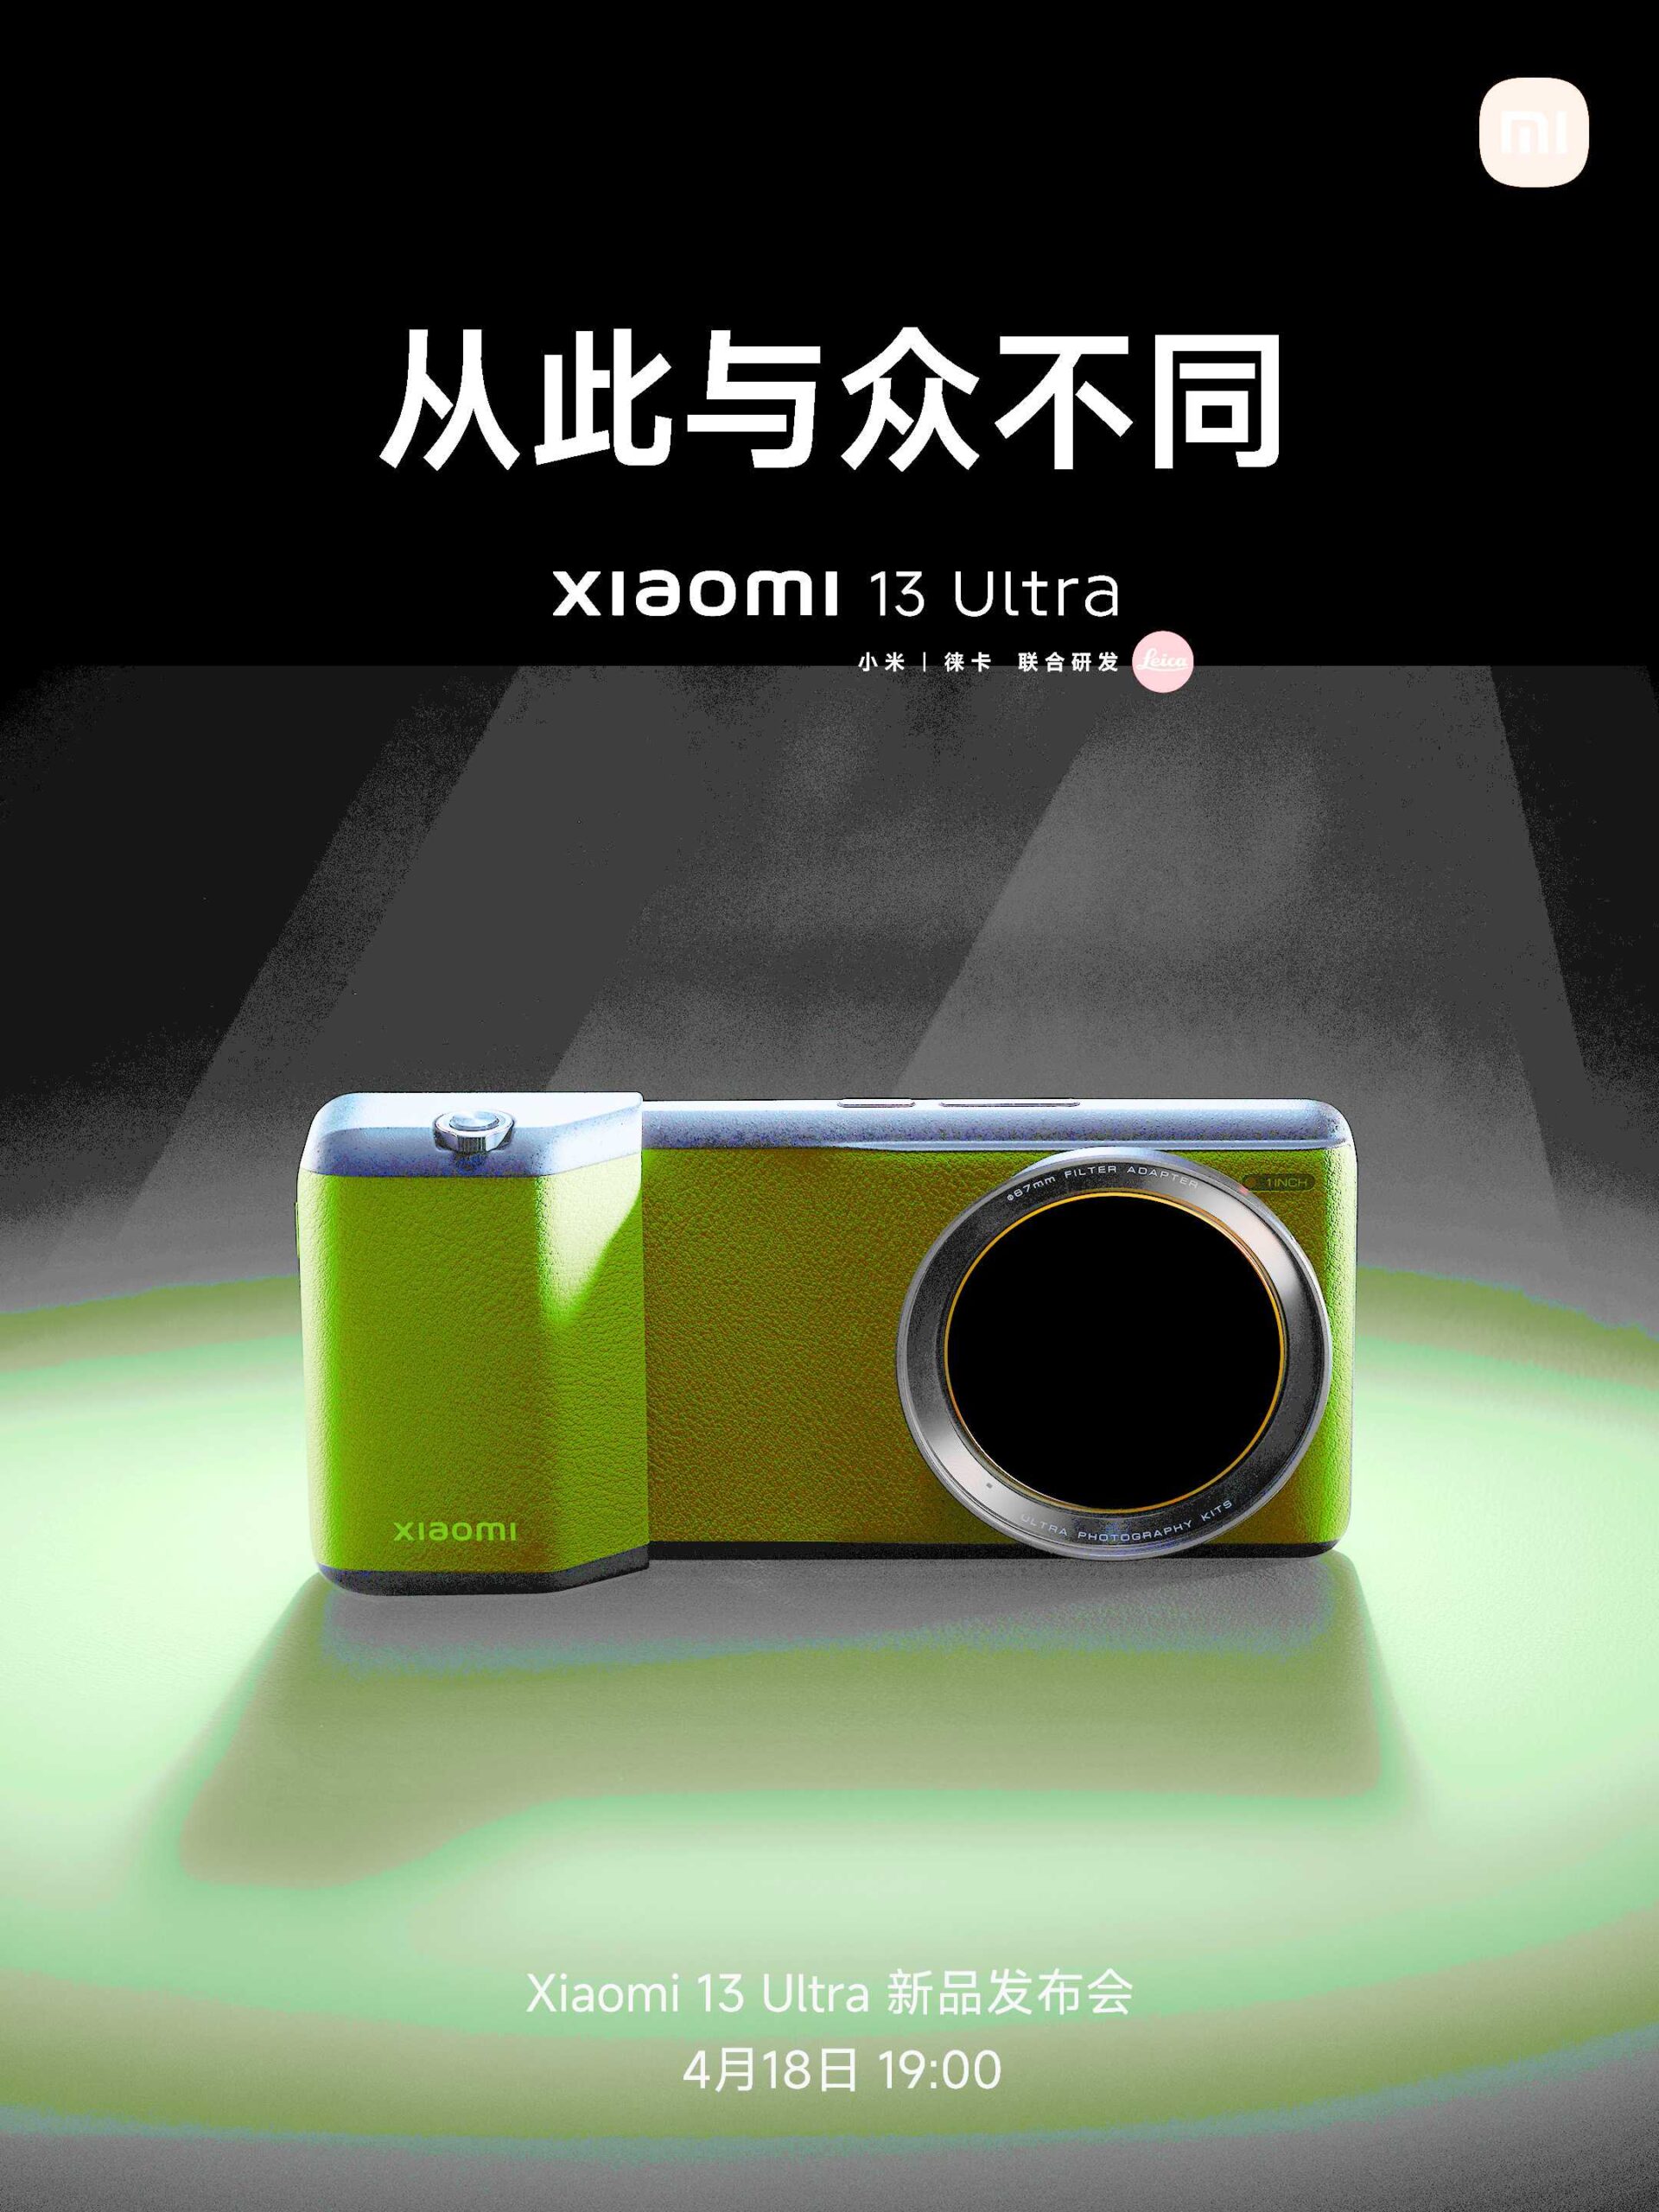 Xiaomi 13 Ultra, profesyonel kamera aparatına sahip olacak